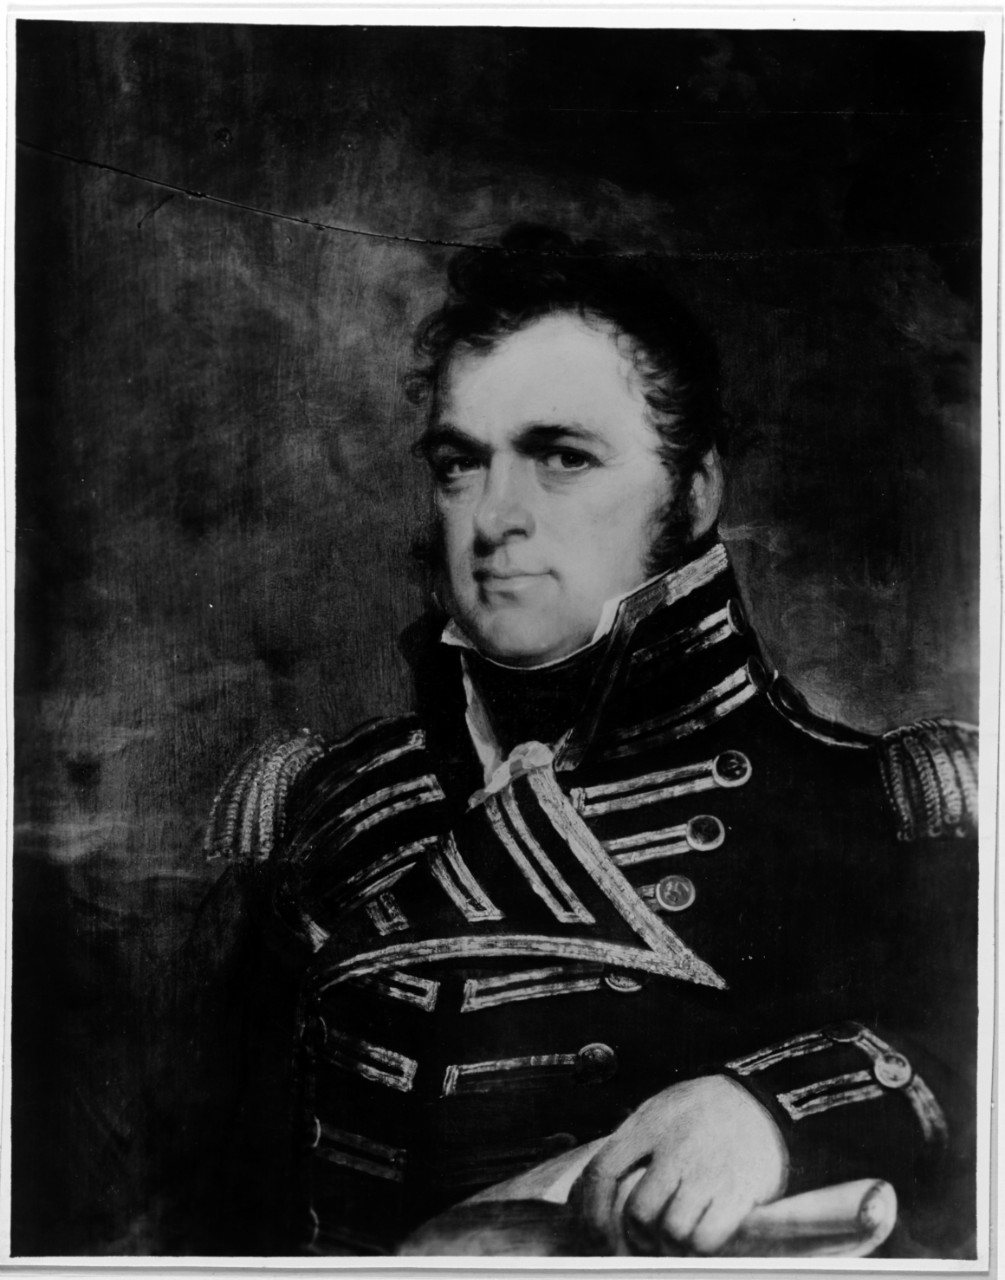 Isaac Chauncey, Commodore, USN